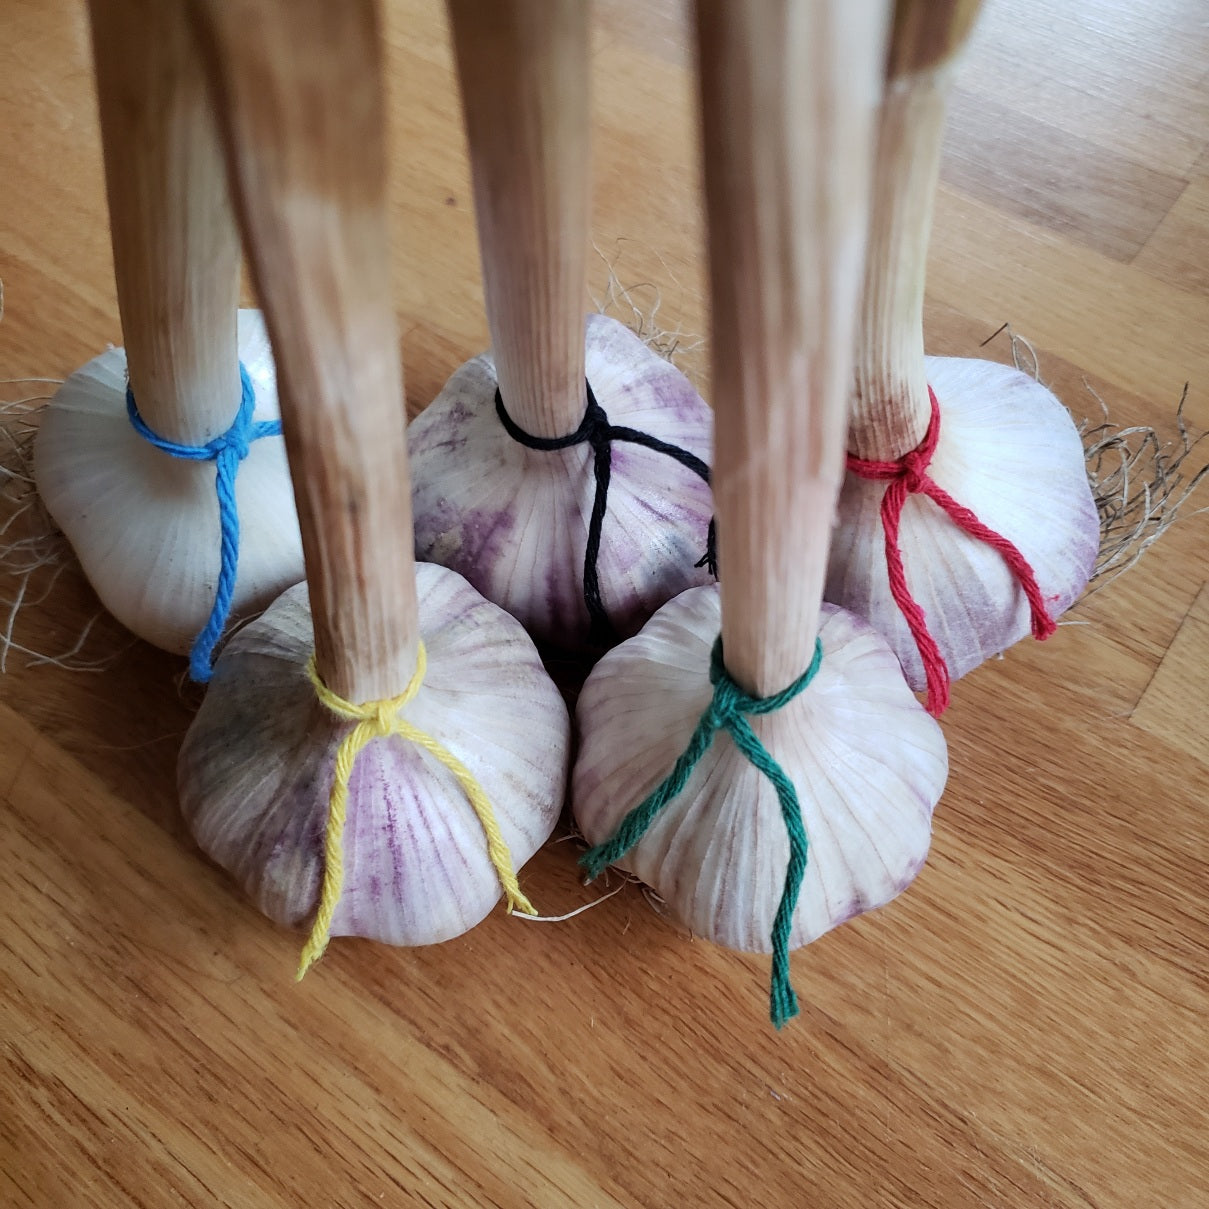 garlic with strings - ontario garlic - Olympic Rings - Team canada - Garlicloves